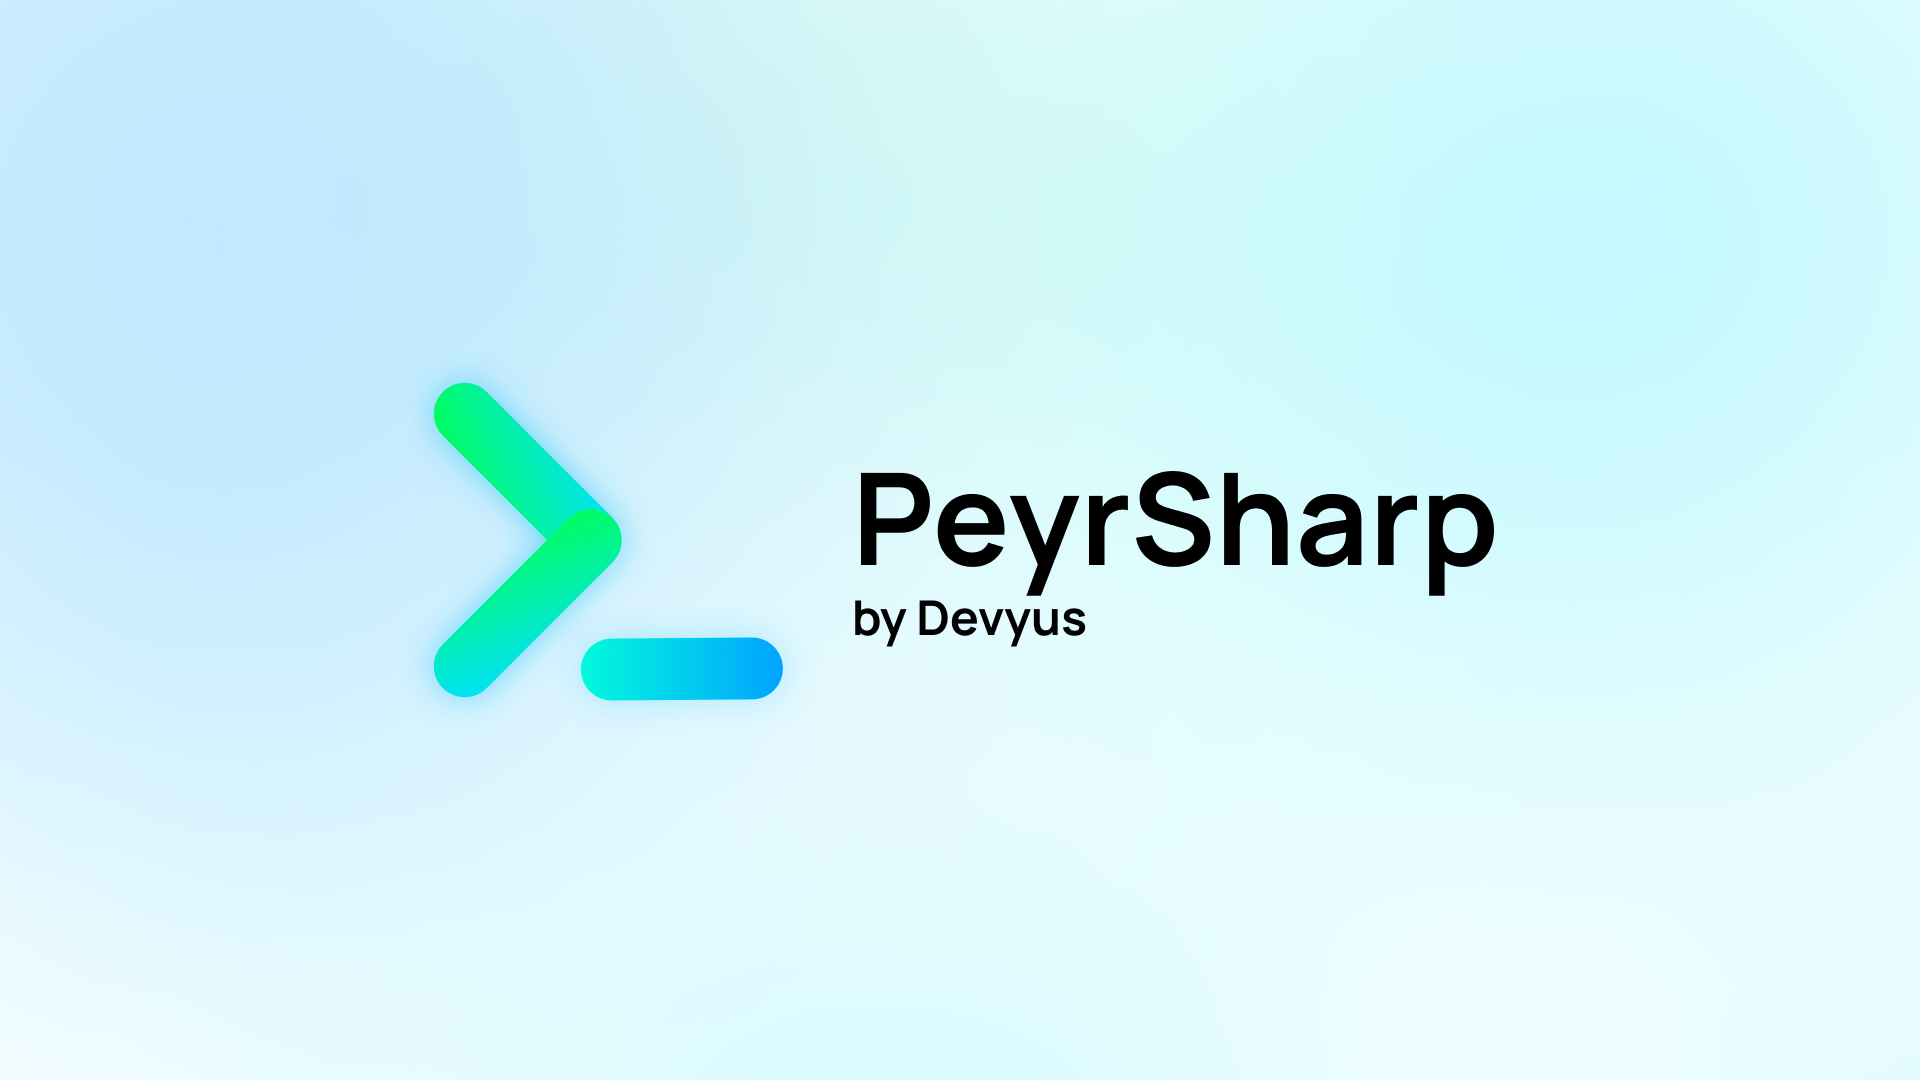 PeyrSharp is now part of Devyus